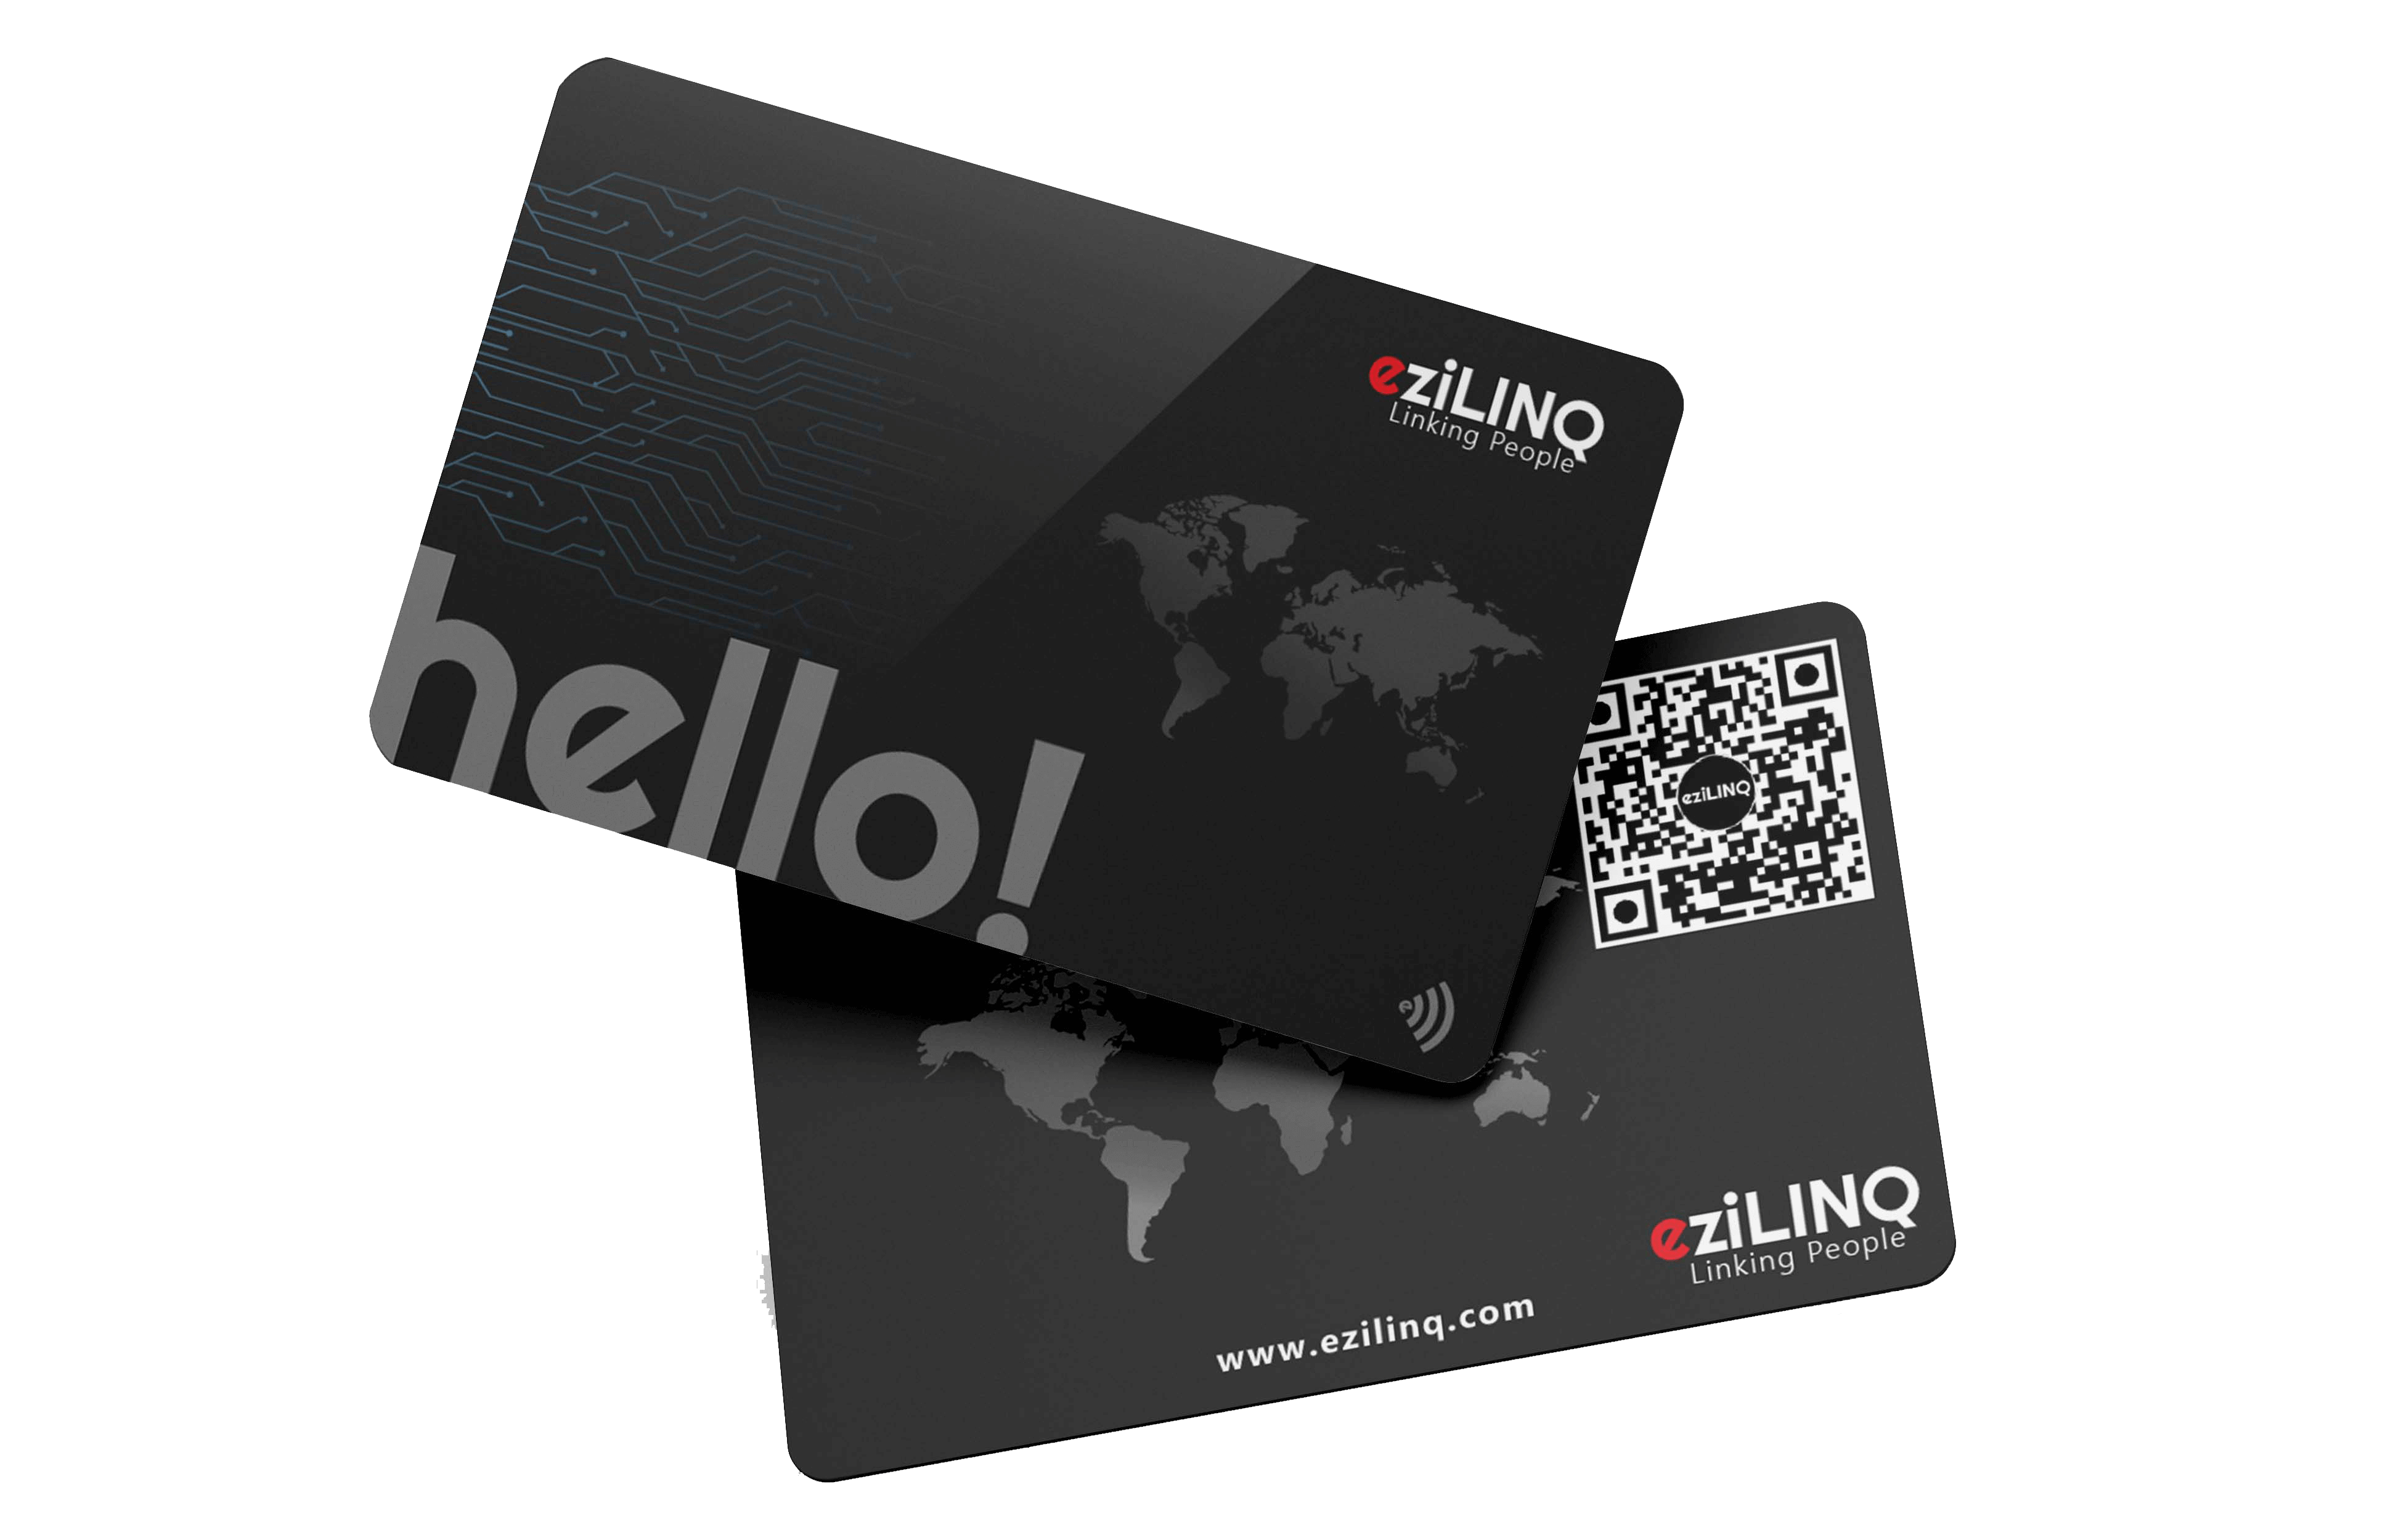 eziLINQ Digital Business Card